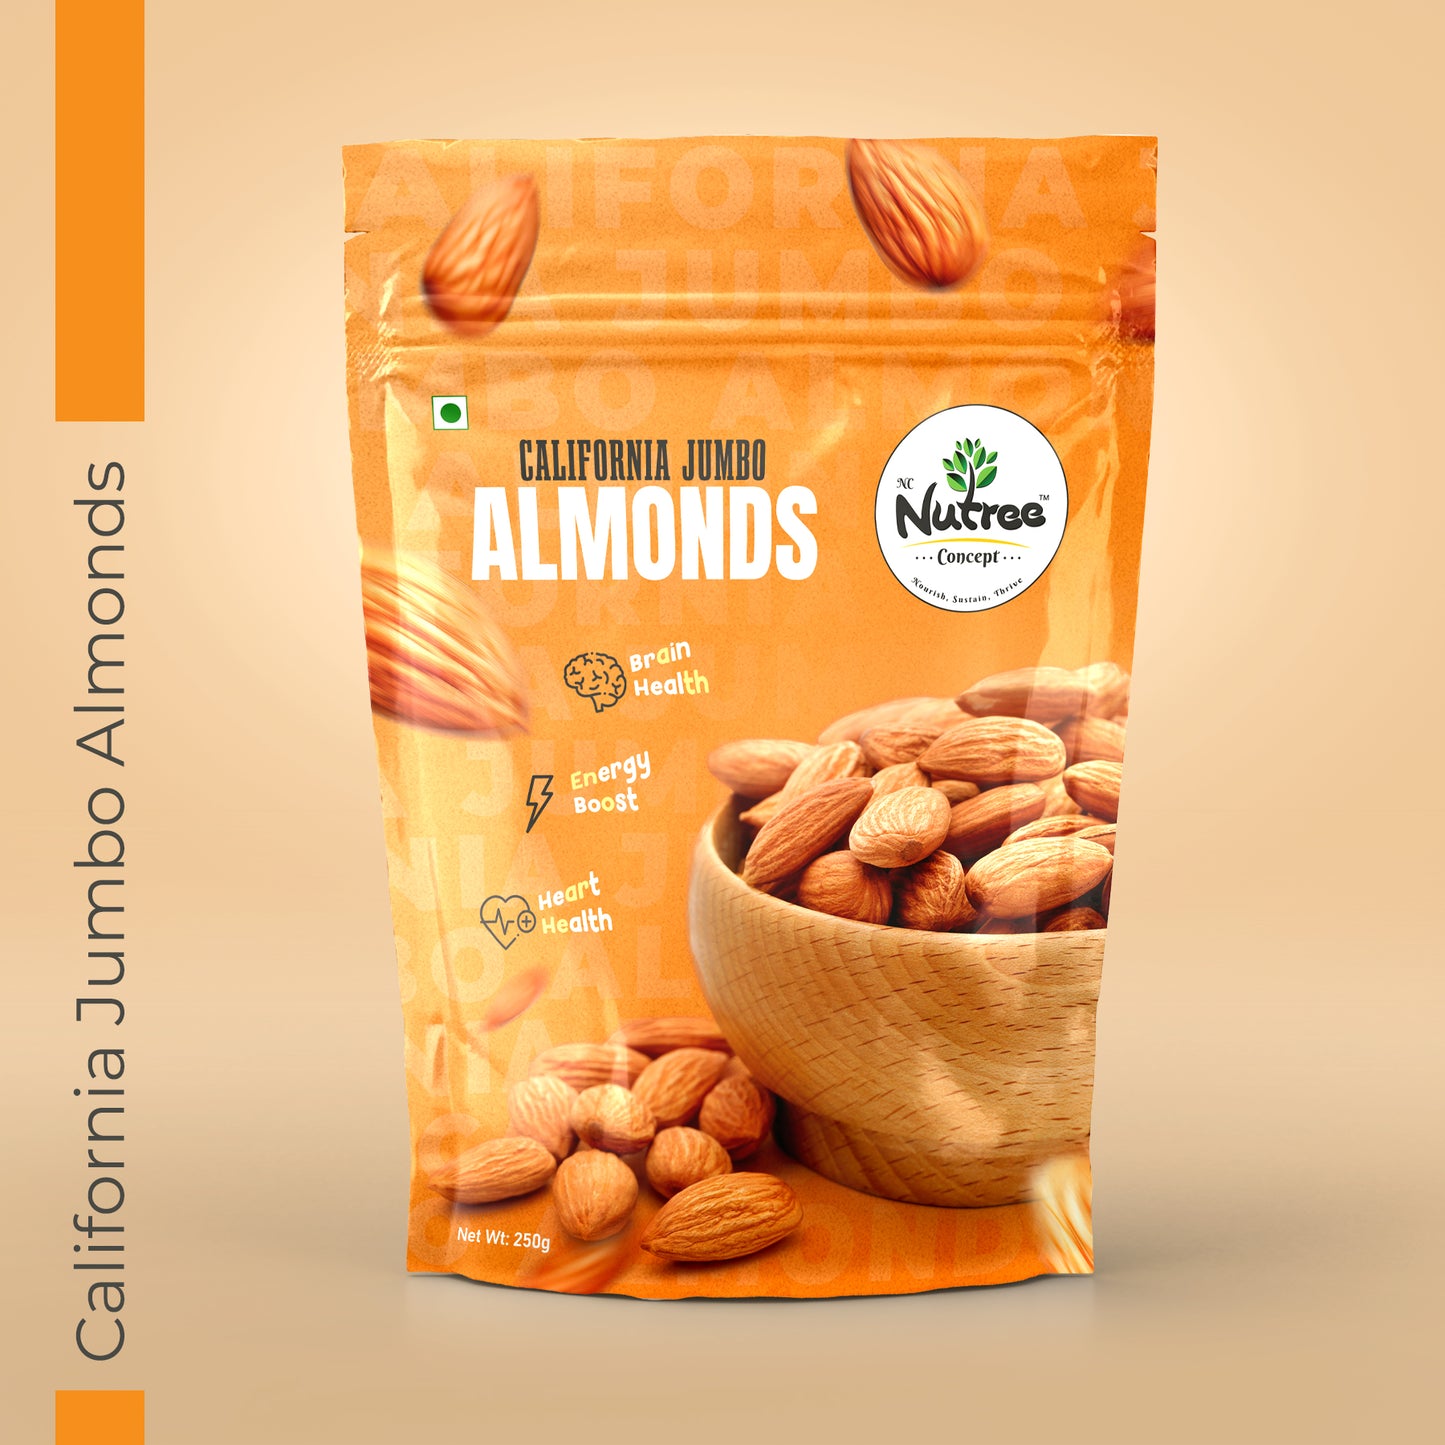 California Jumbo Almonds